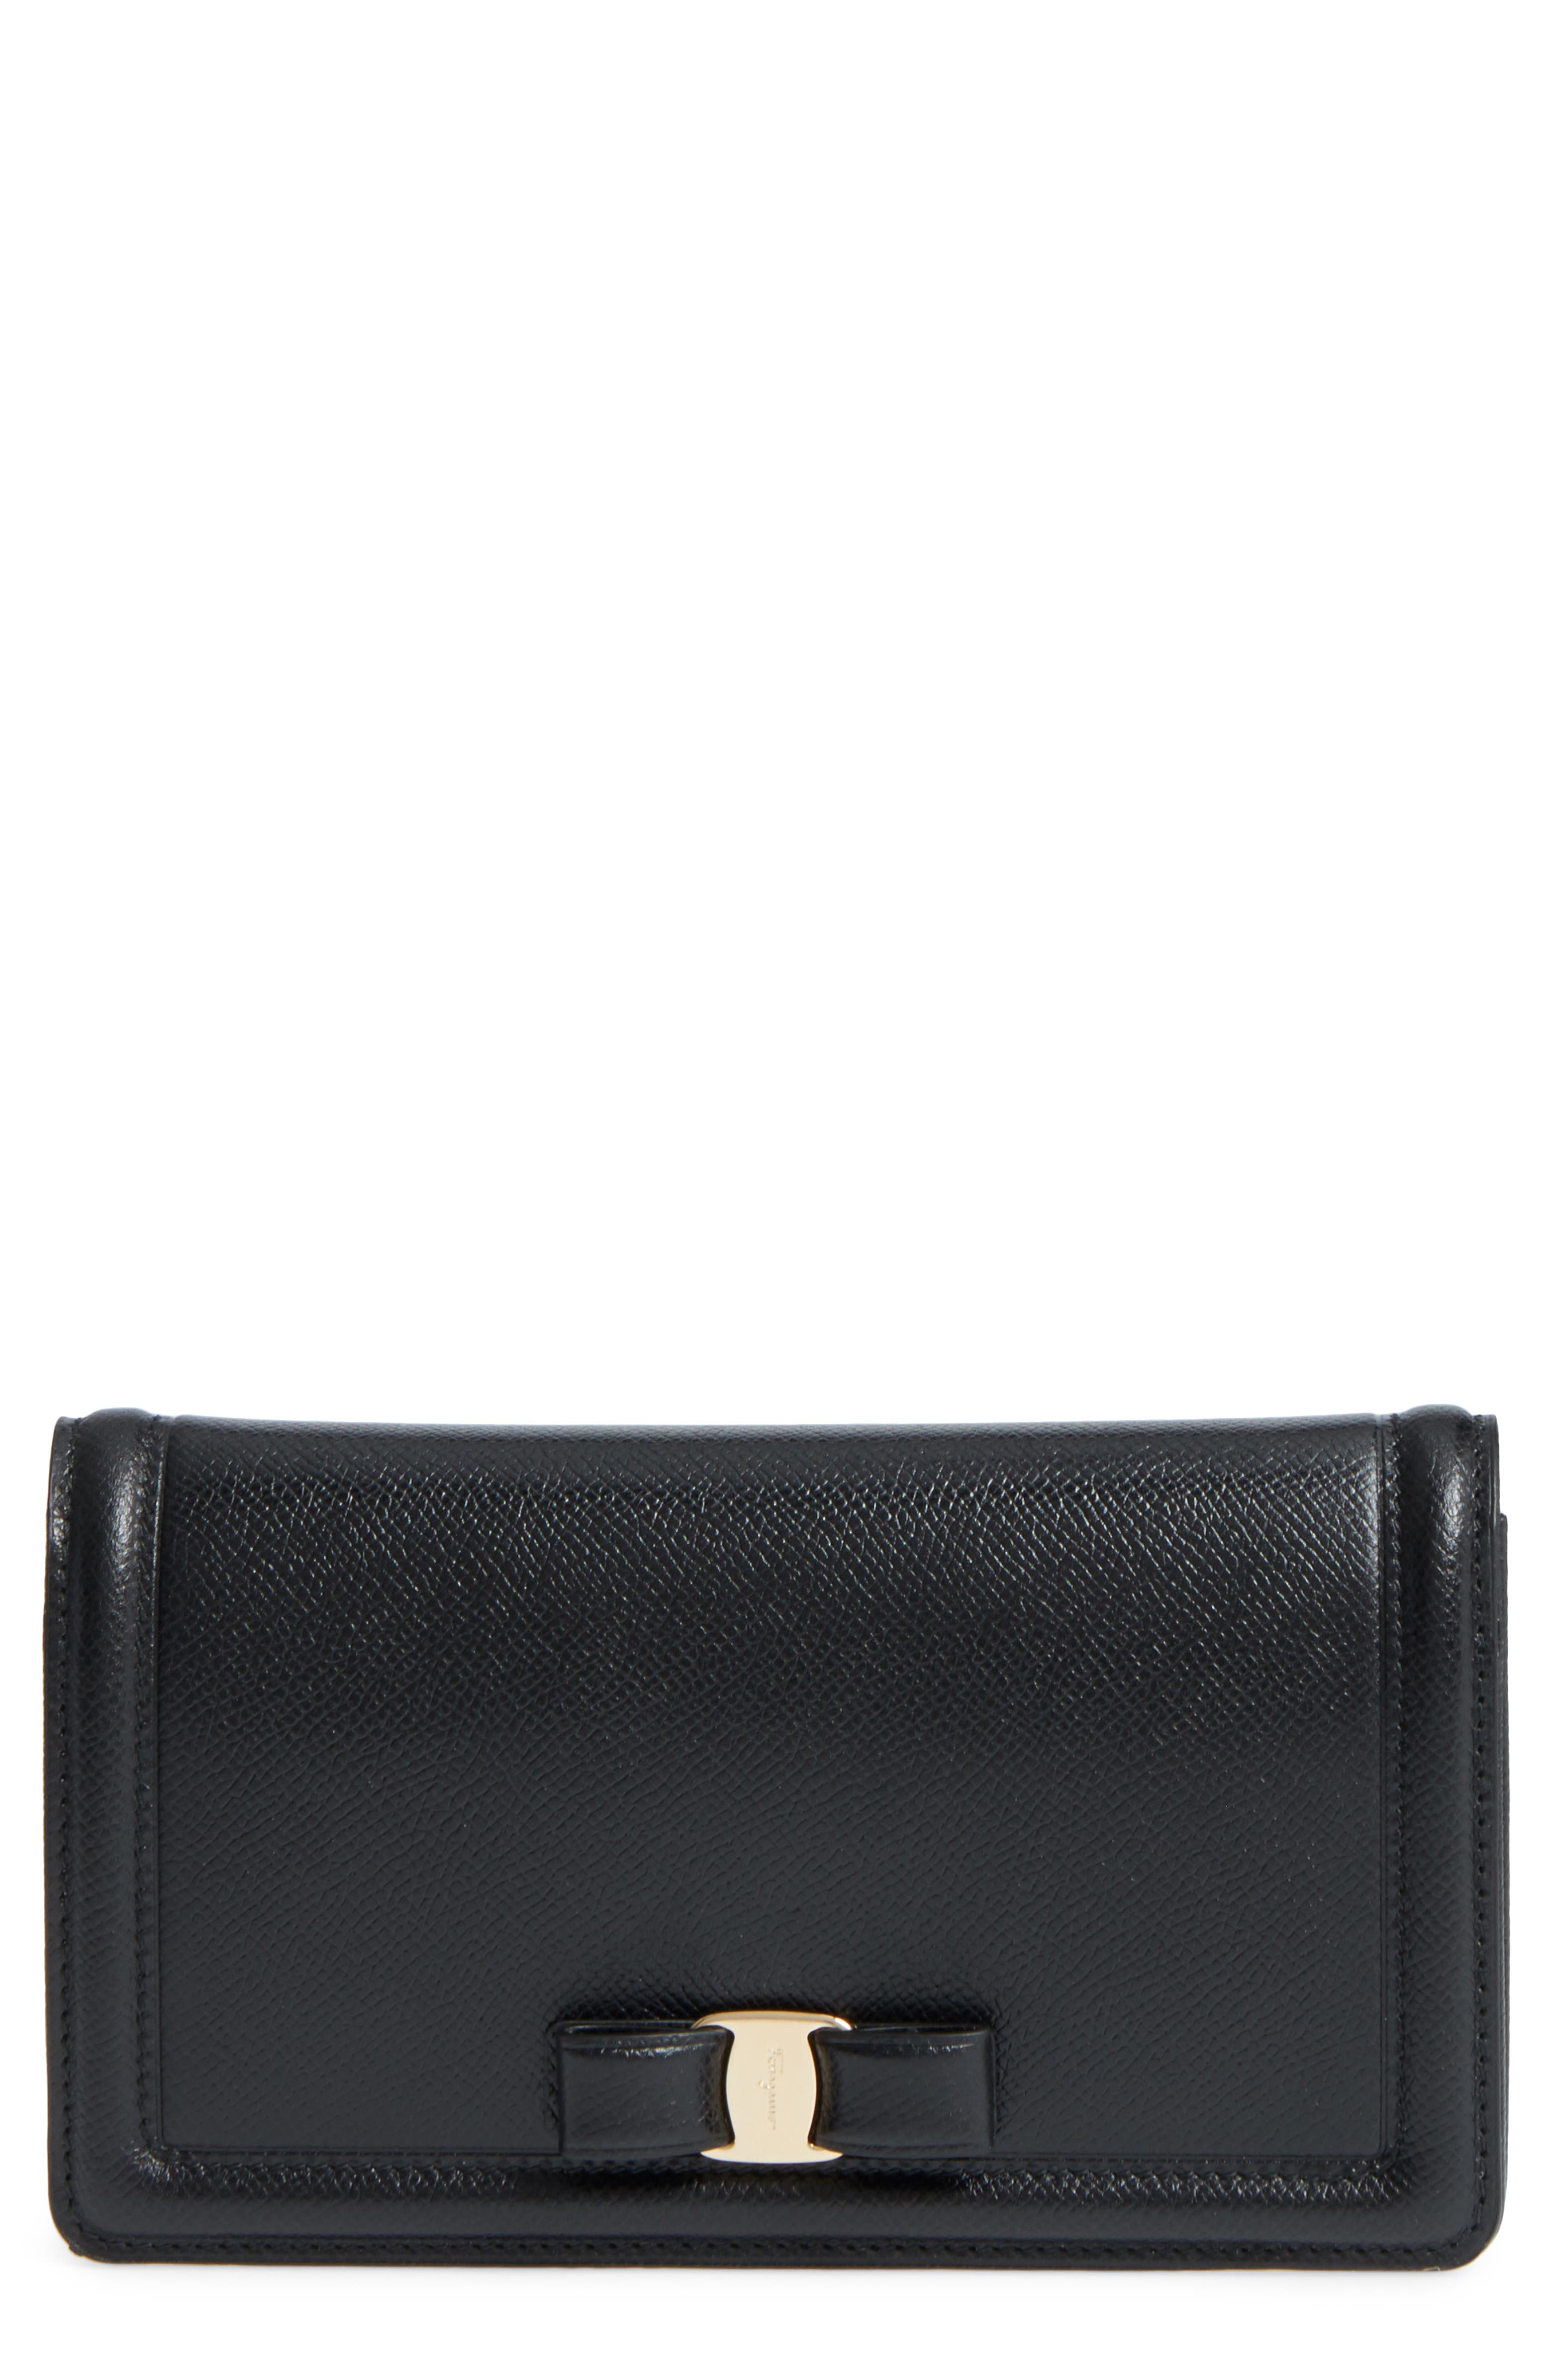 Salvatore Ferragamo Vara Leather Wallet on a Chain | Nordstrom